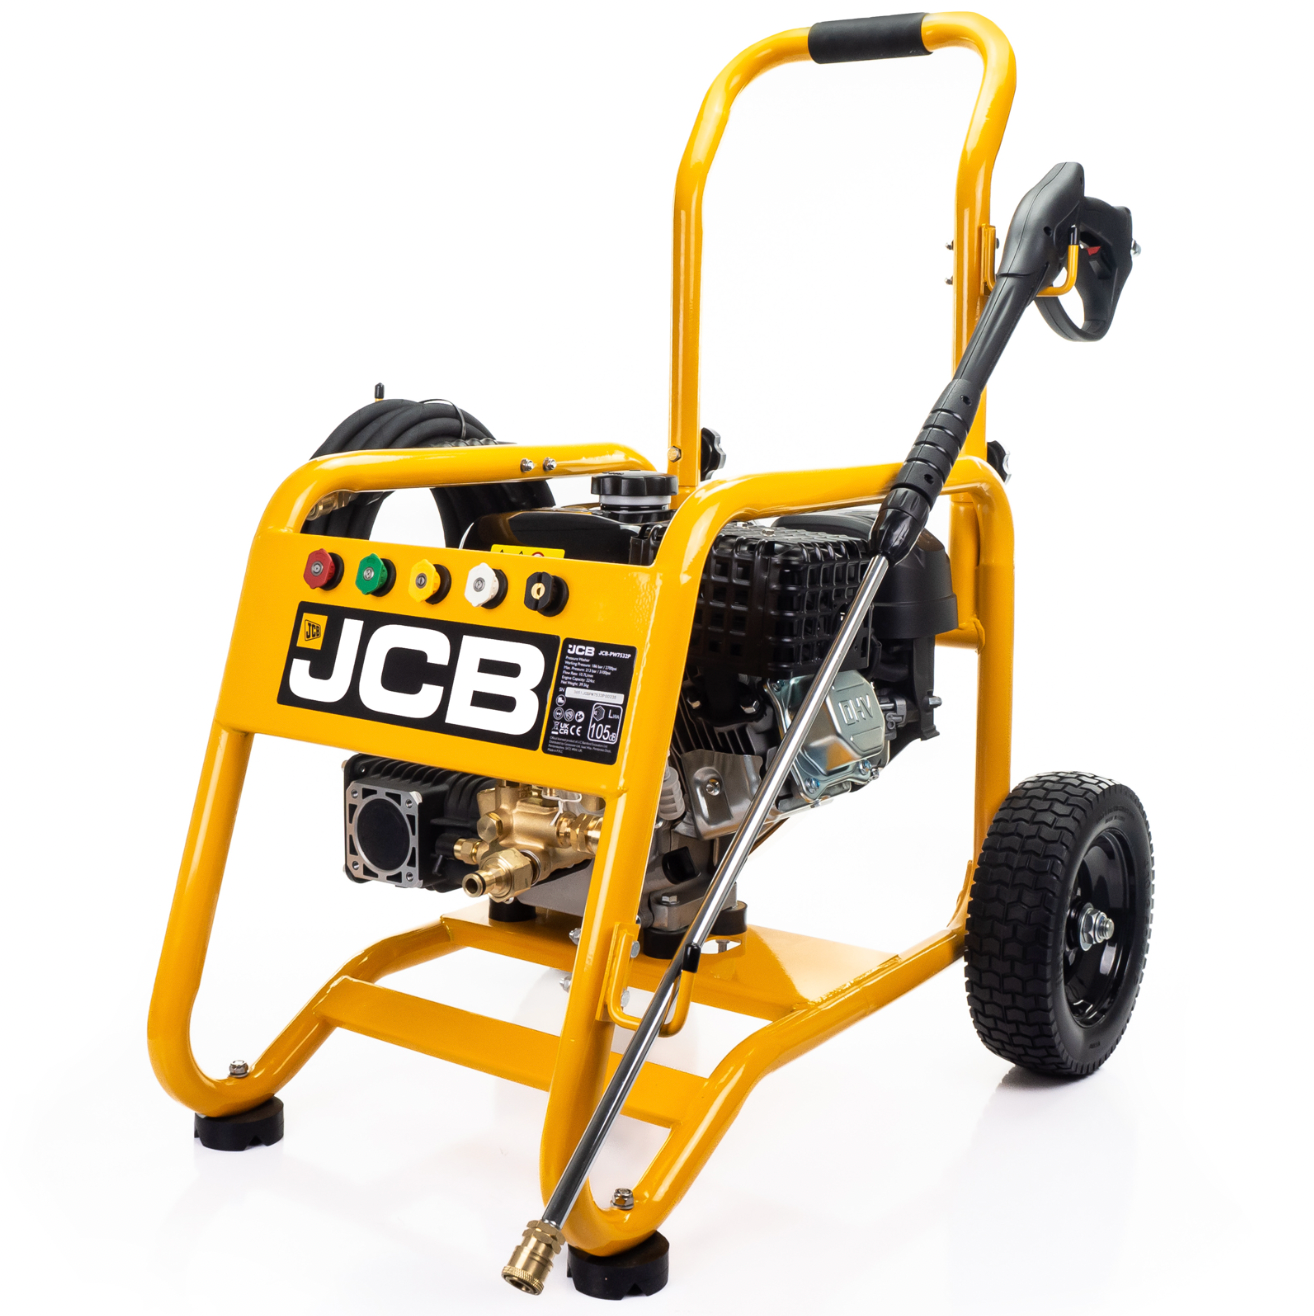 JCB 3100 PSI Petrol Pressure Washer - High-Performance 7.5HP, 213 BAR, 10.7L/min Flow Rate